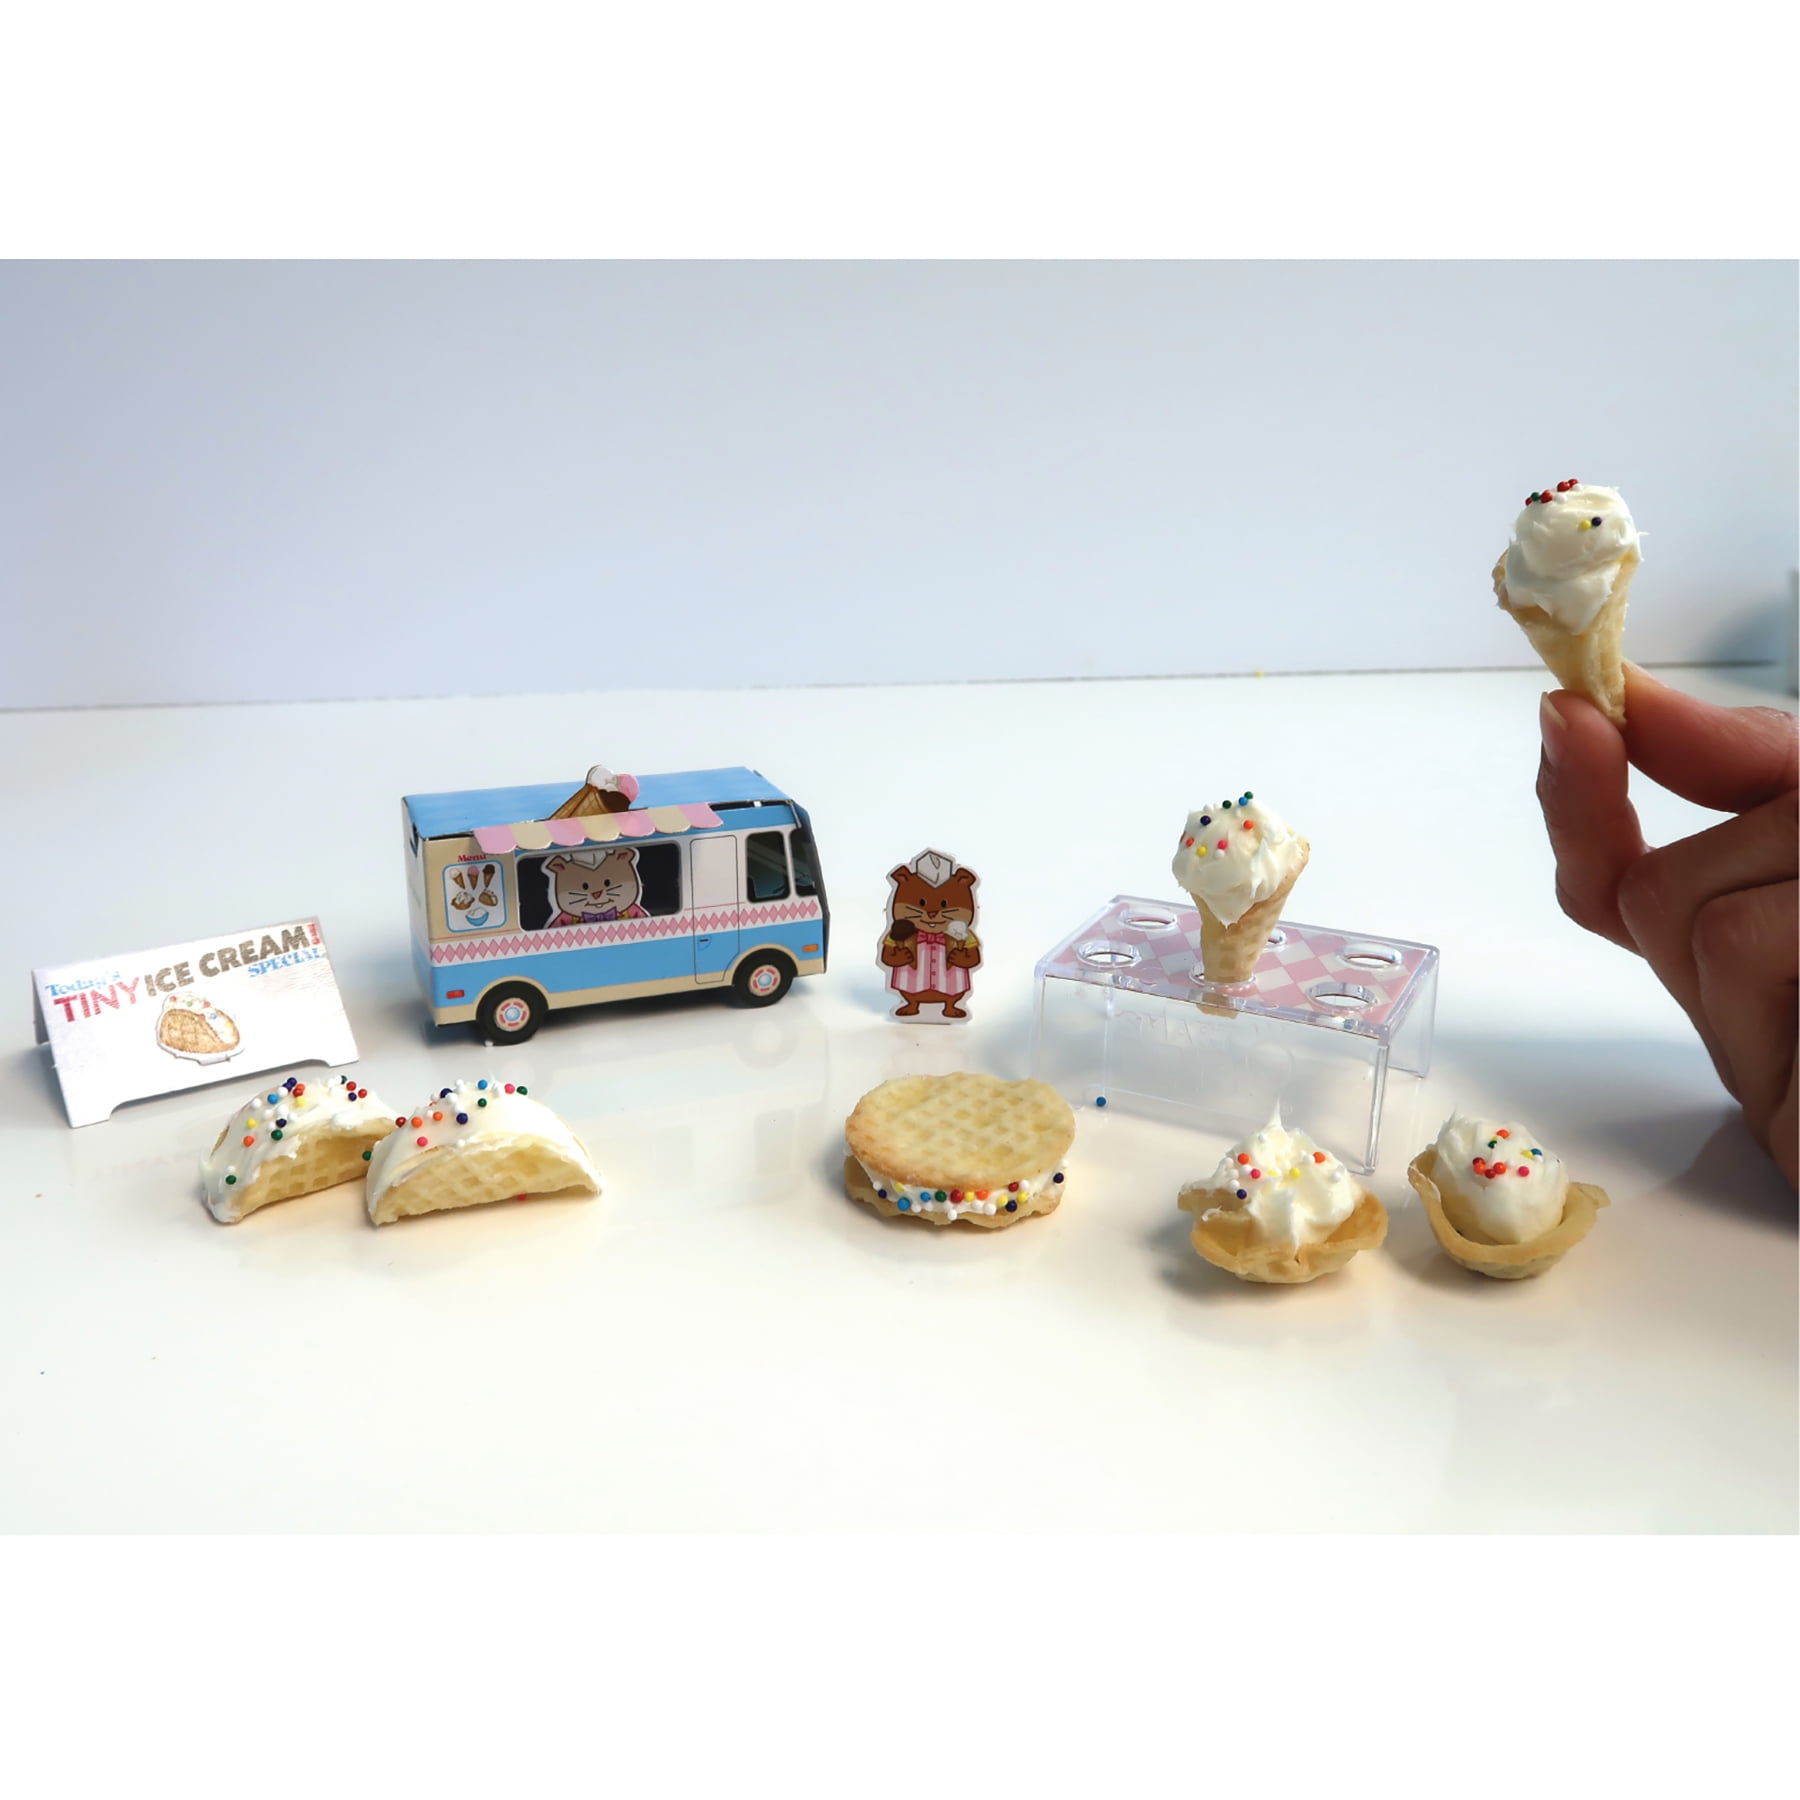 Tiny Ice Cream Kit – The Woobles